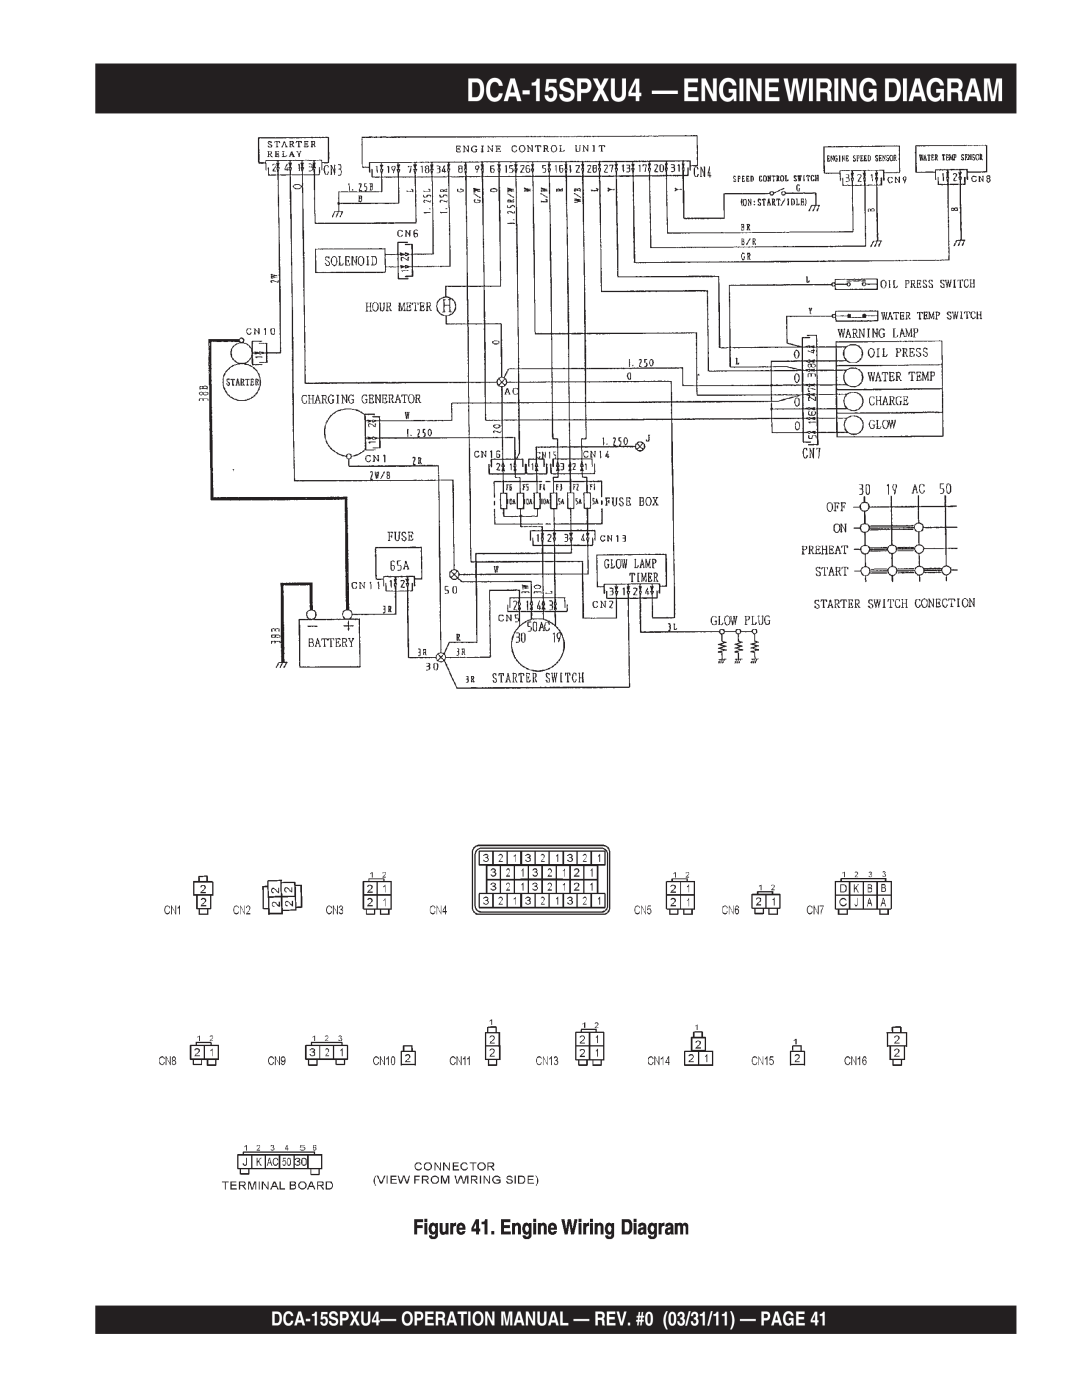 Multiquip operation manual DCA-15SPXU4- ENGINEWIRING DIAGRAM, Engine Wiring Diagram 